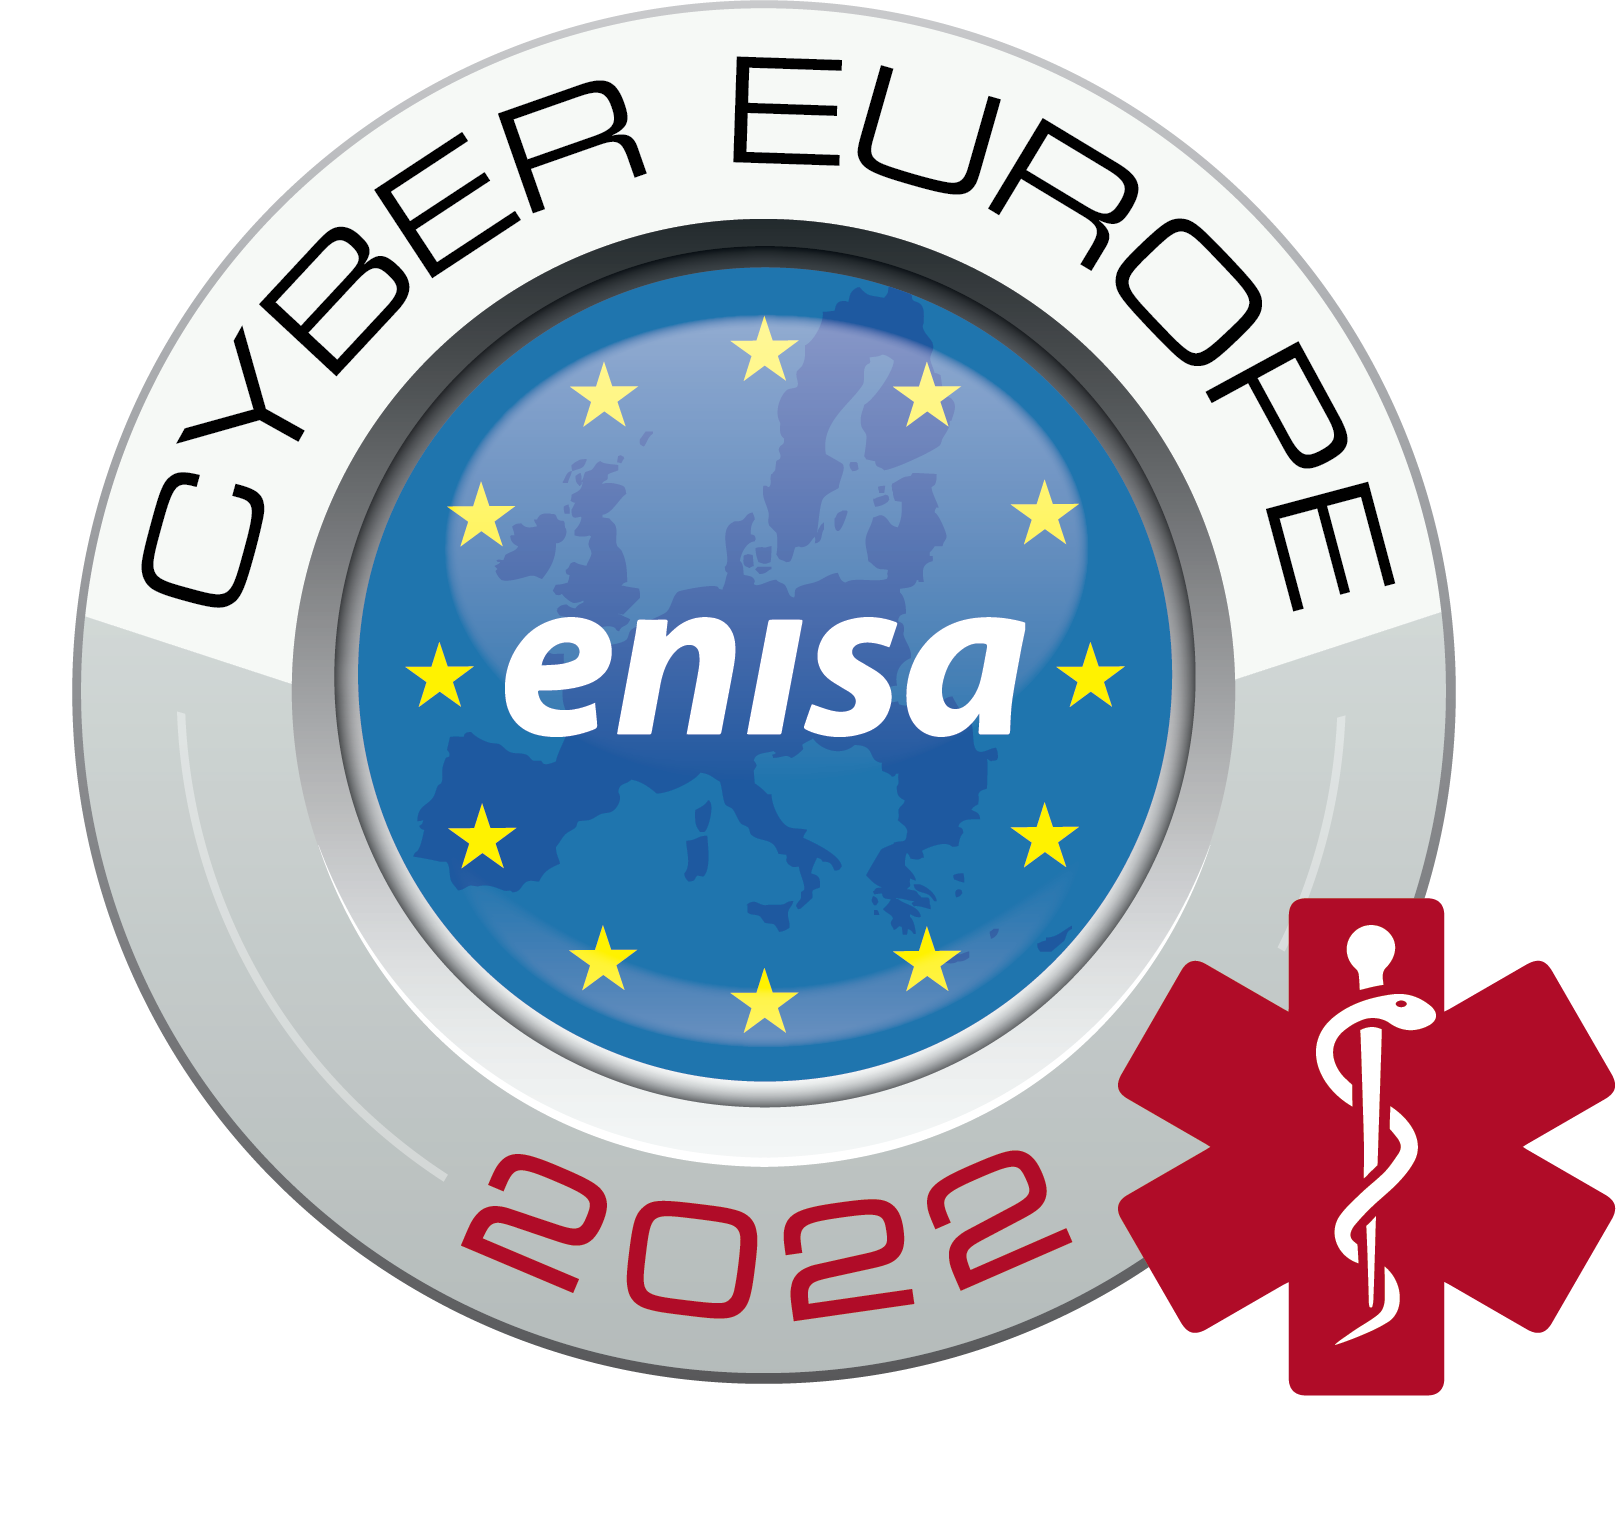 Cyber Europe exercise logo 2022